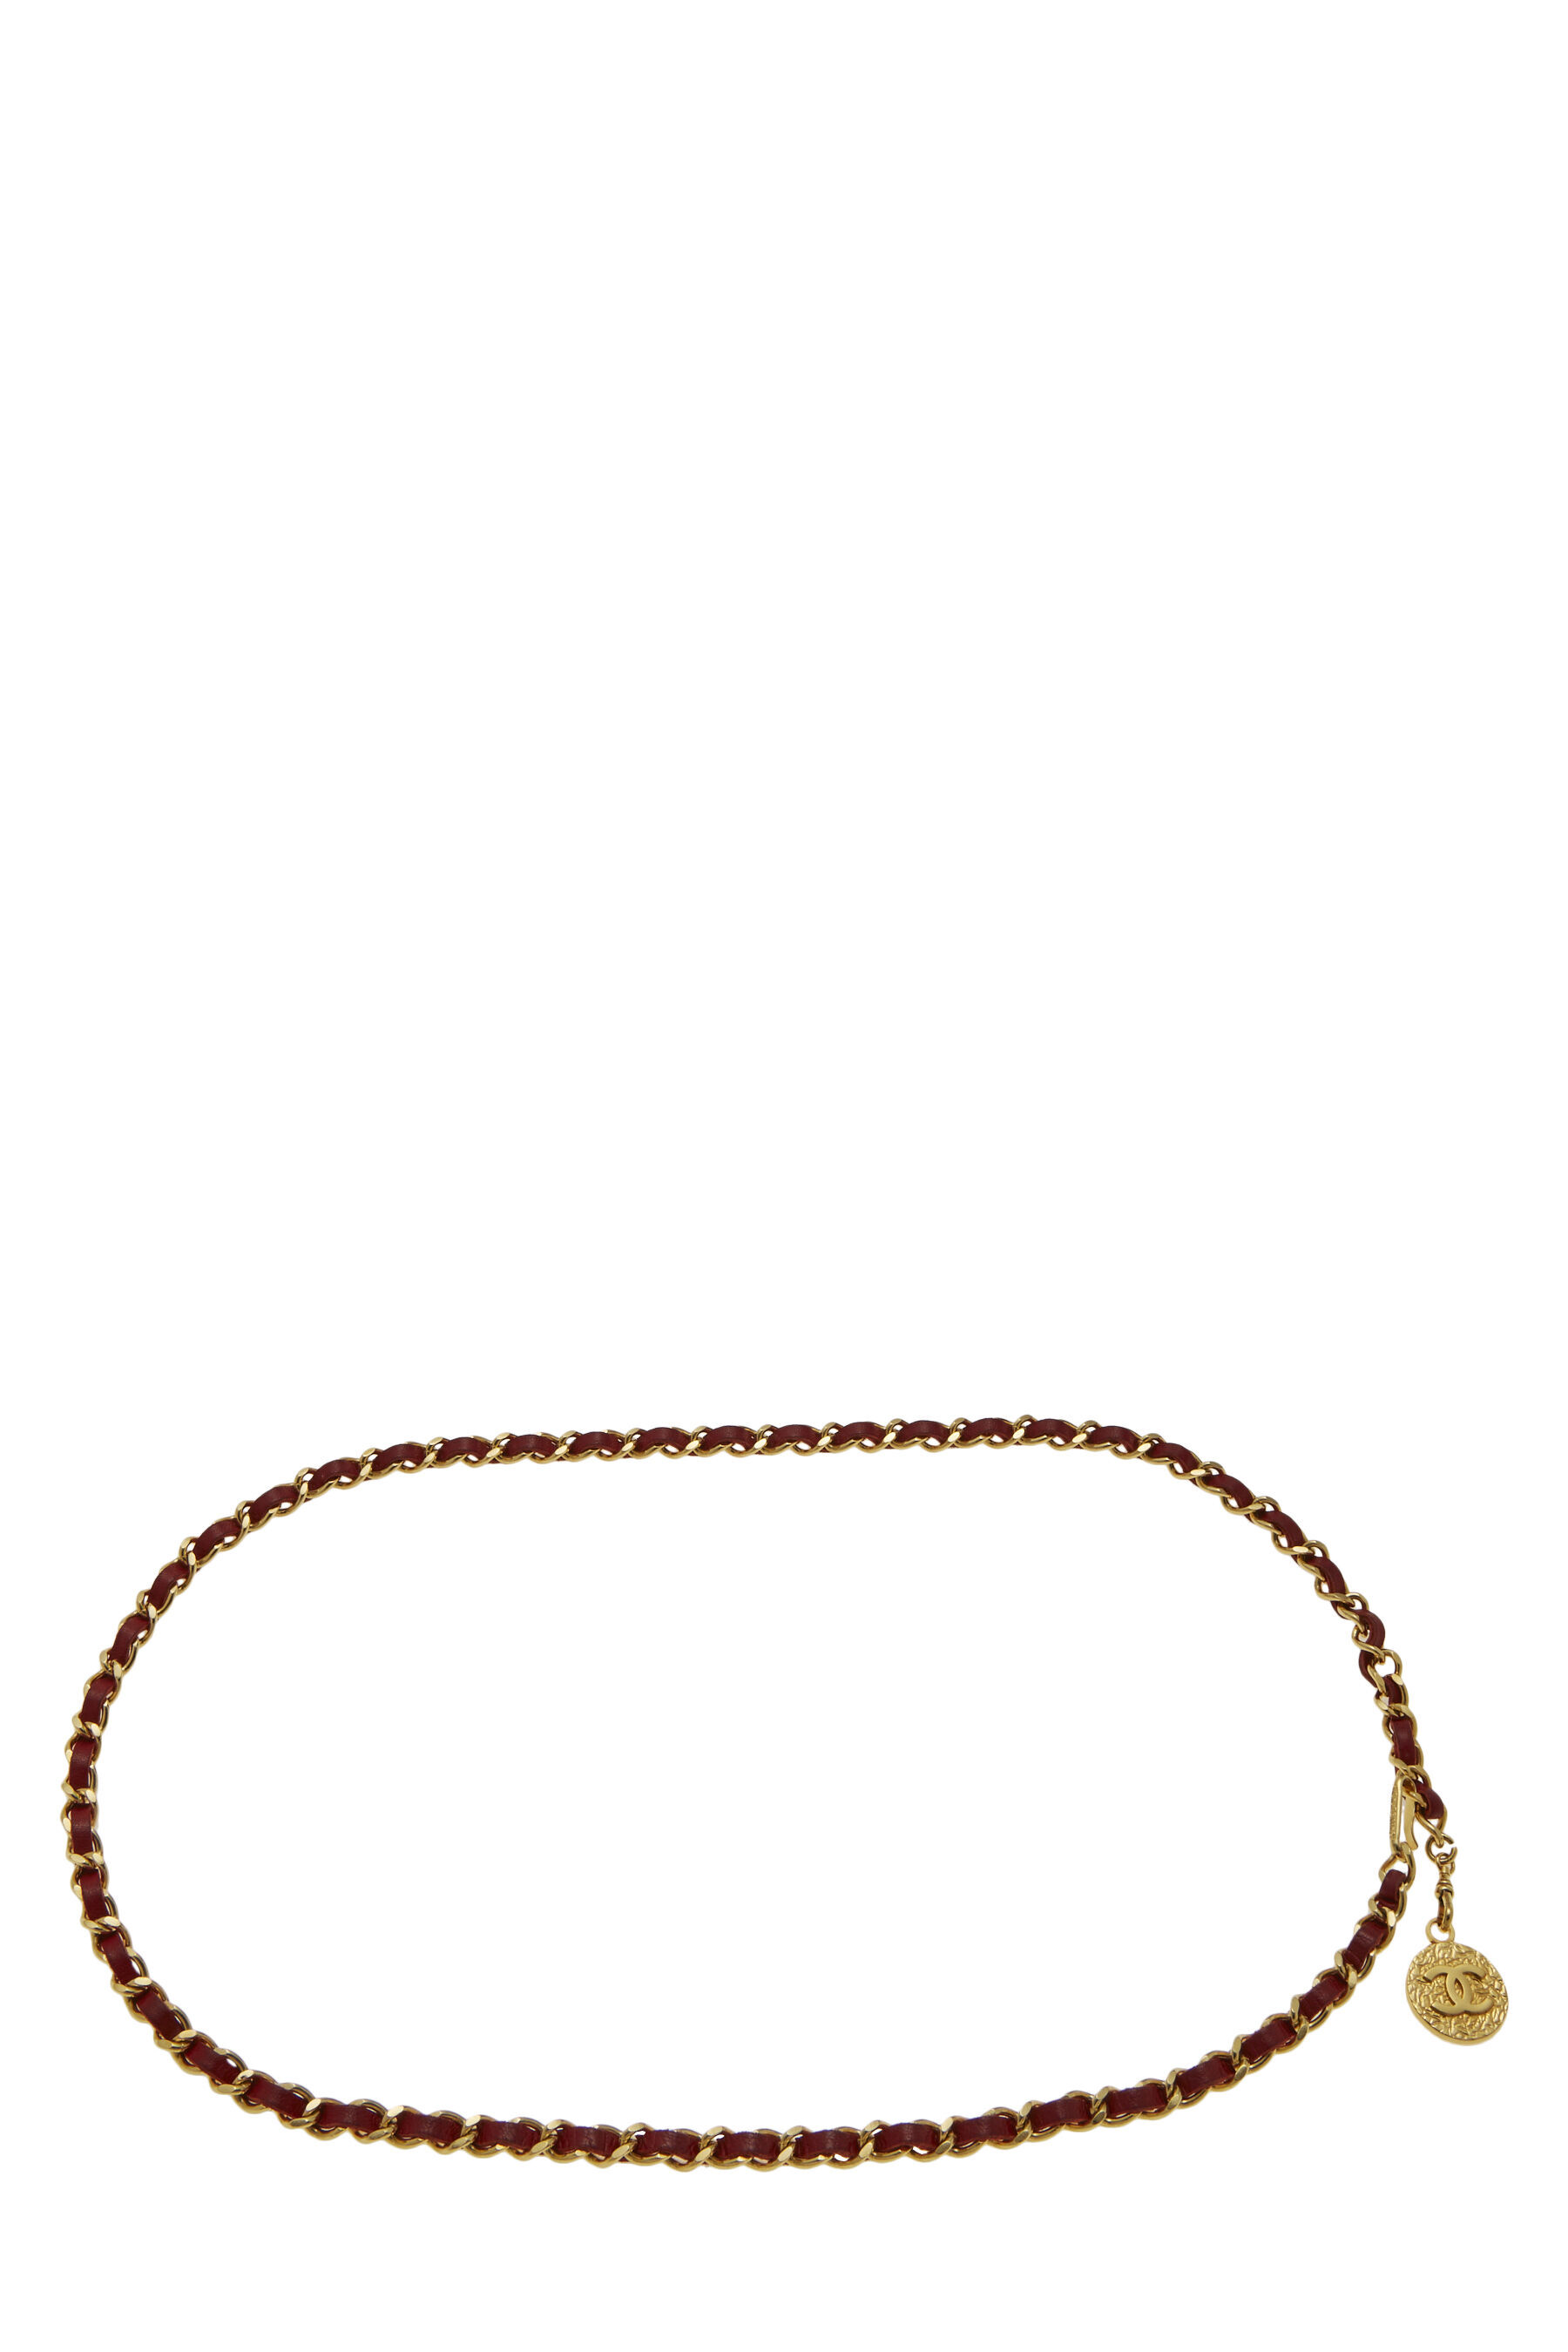 Chanel Belt, 名牌, 飾物及配件- Carousell